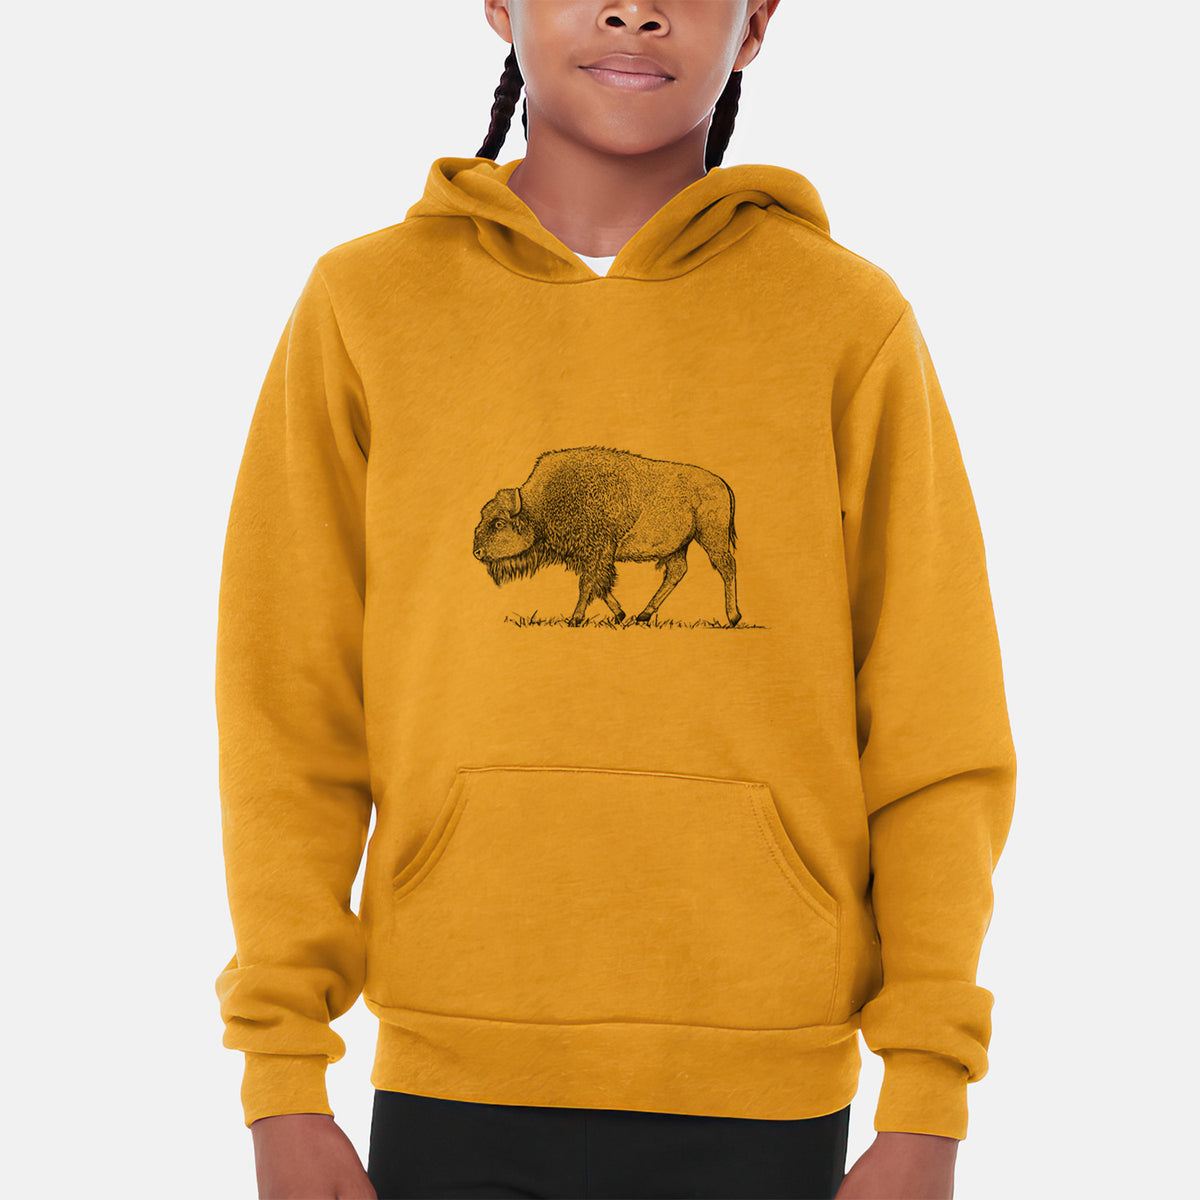 American Bison / Buffalo - Bison bison - Youth Hoodie Sweatshirt